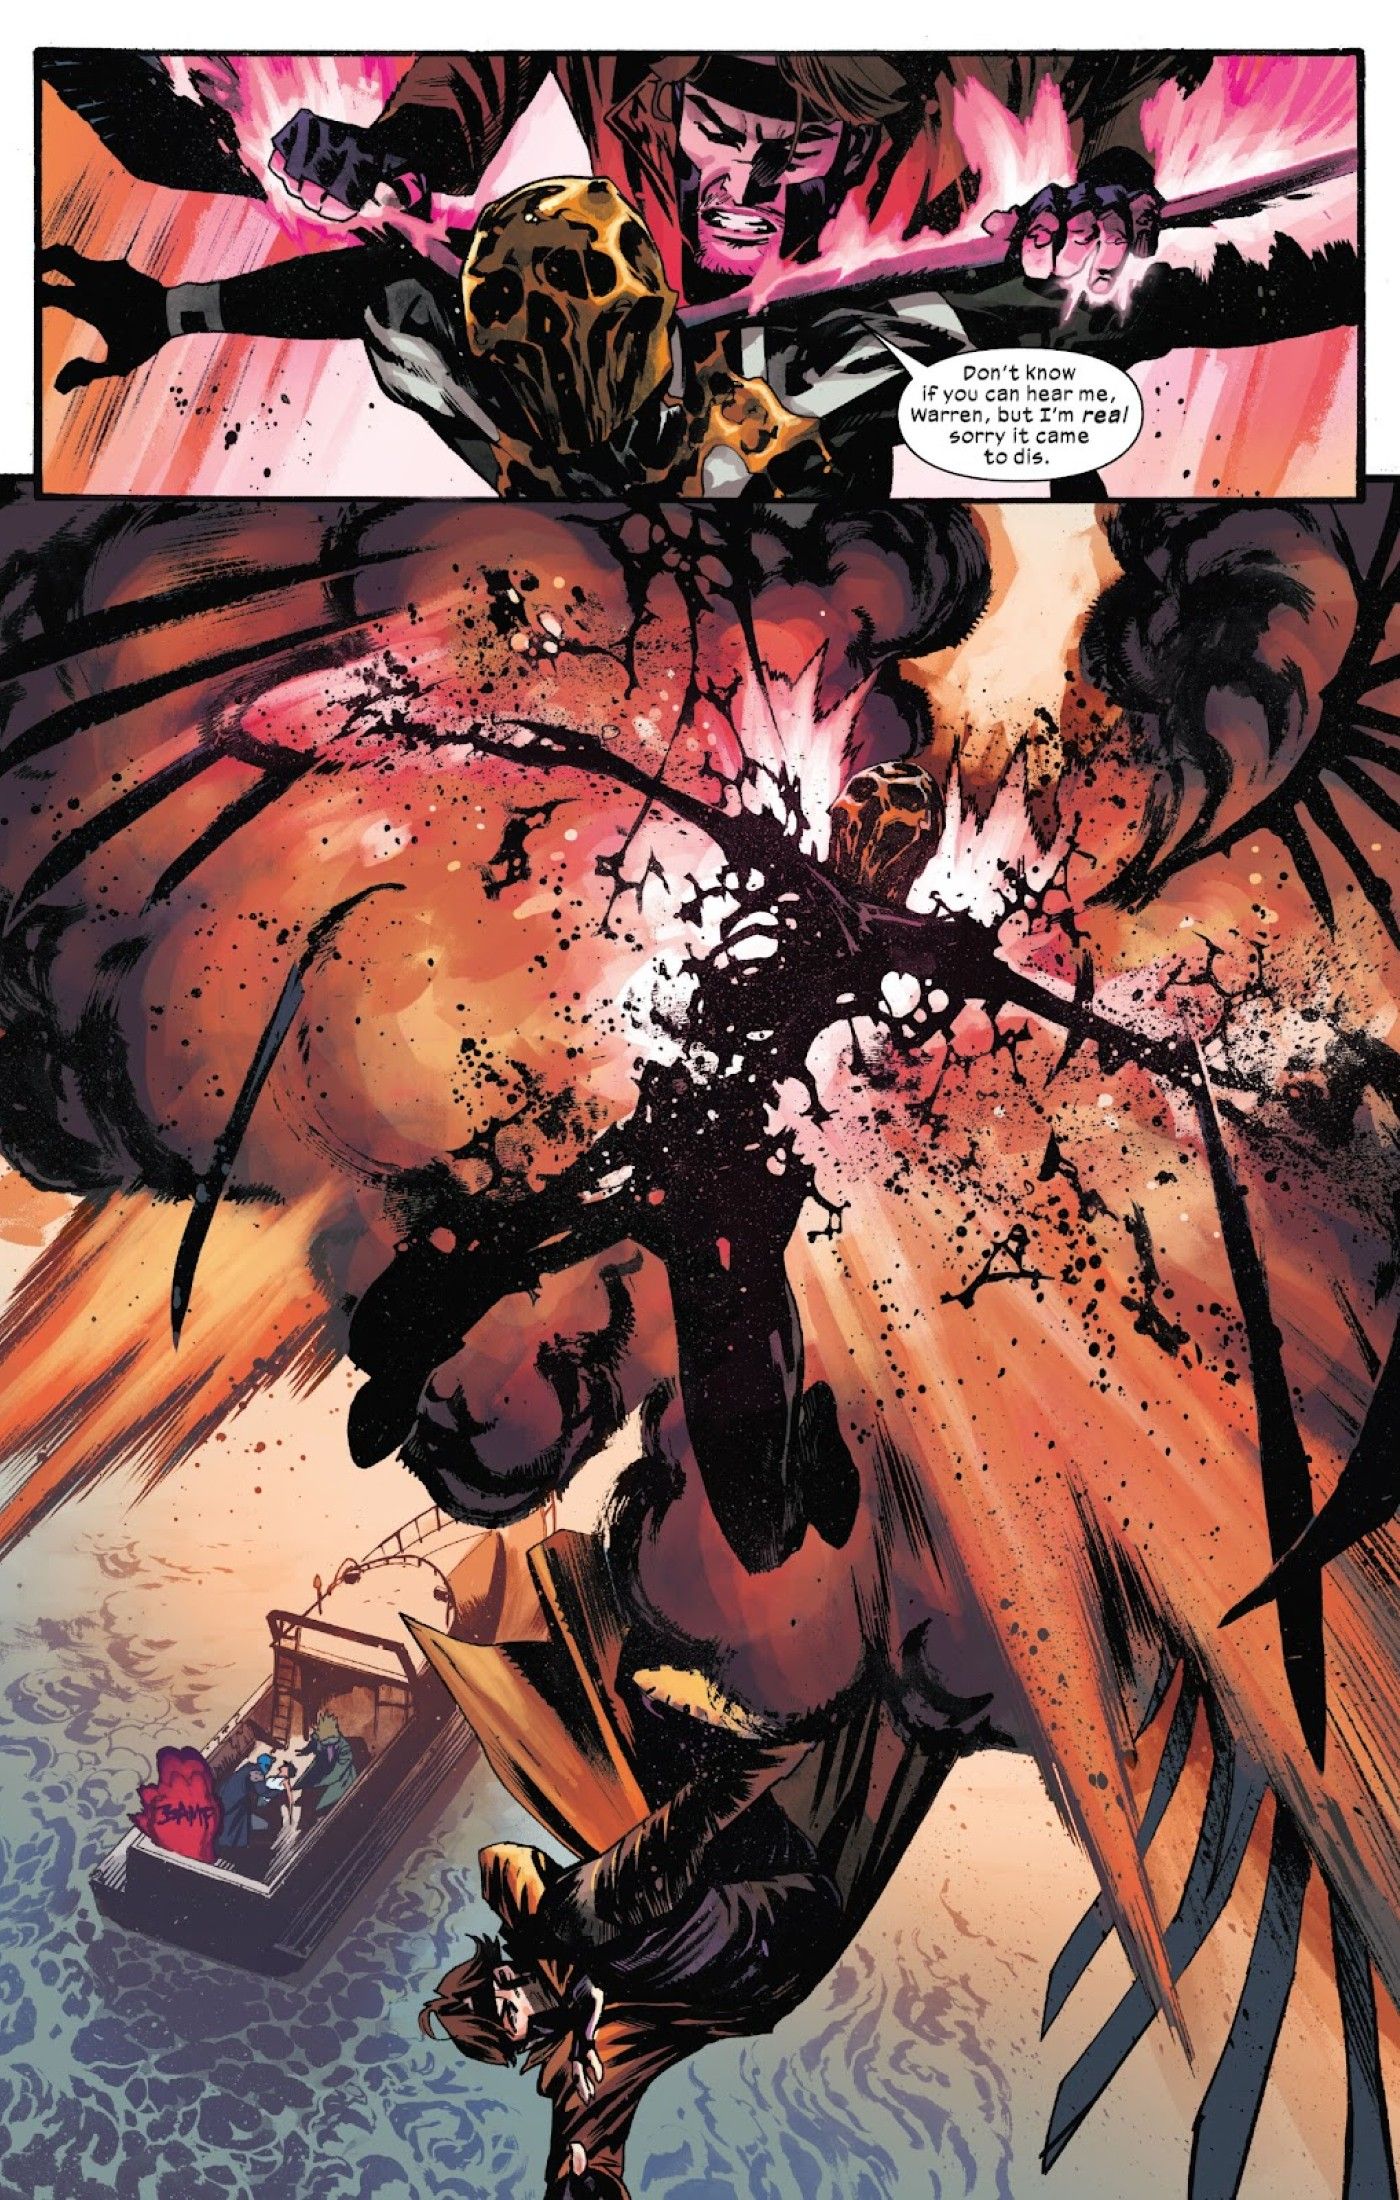 Gambit kills Angel